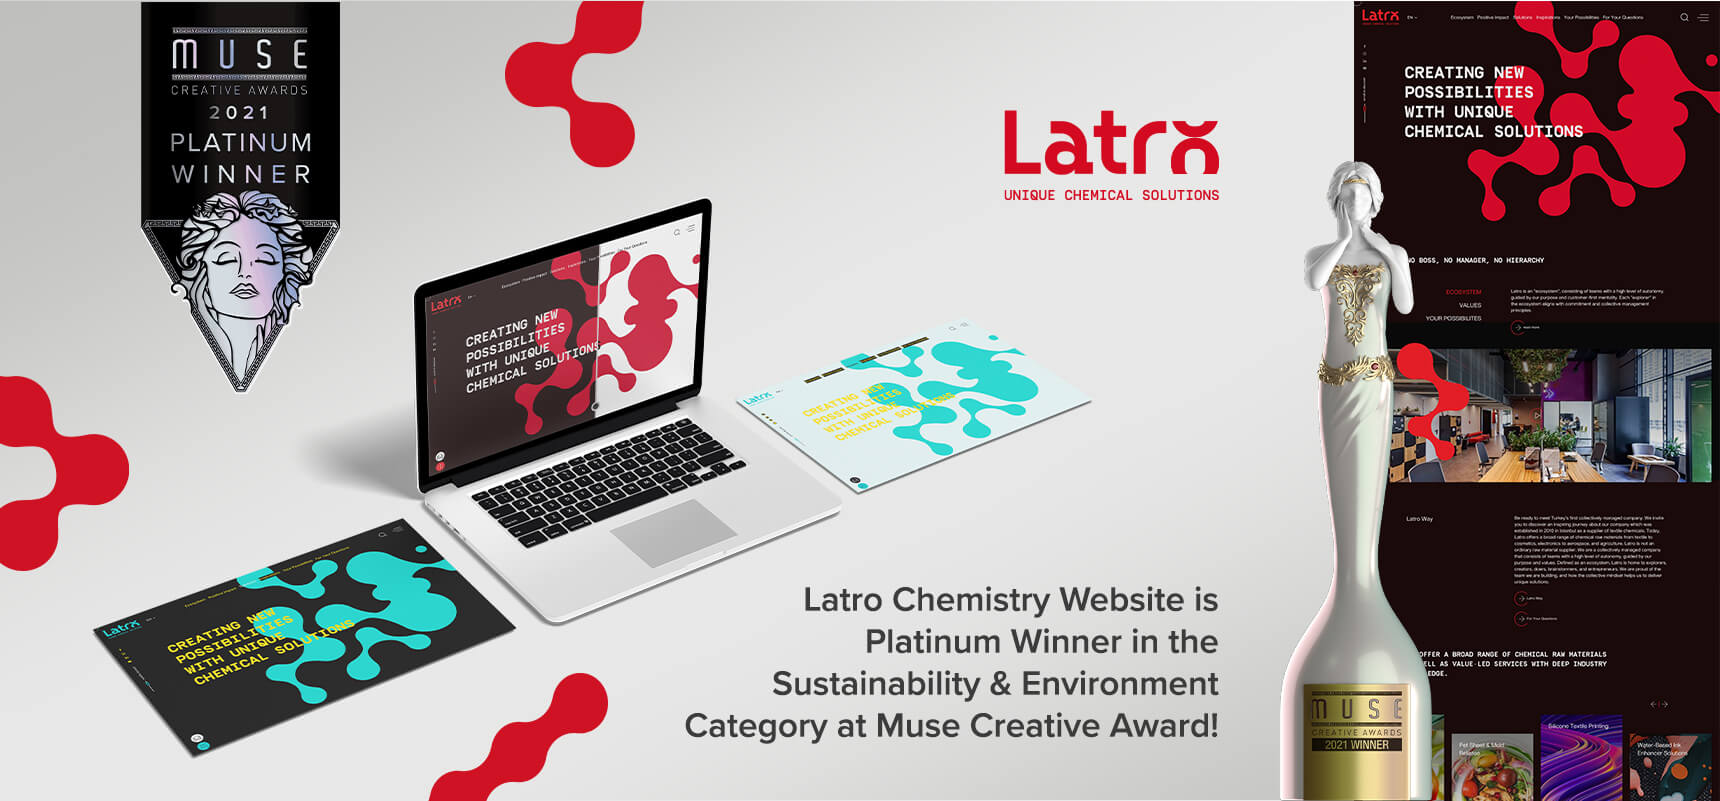 Latro-2 - wrinting 1-3 - brand images-5 - website-home-5 - web-video-6 - pozitif etki-1-7 - pozitif etki-2-8 - pozitif etki-3-9 - writing-award-10 - latro-muse award